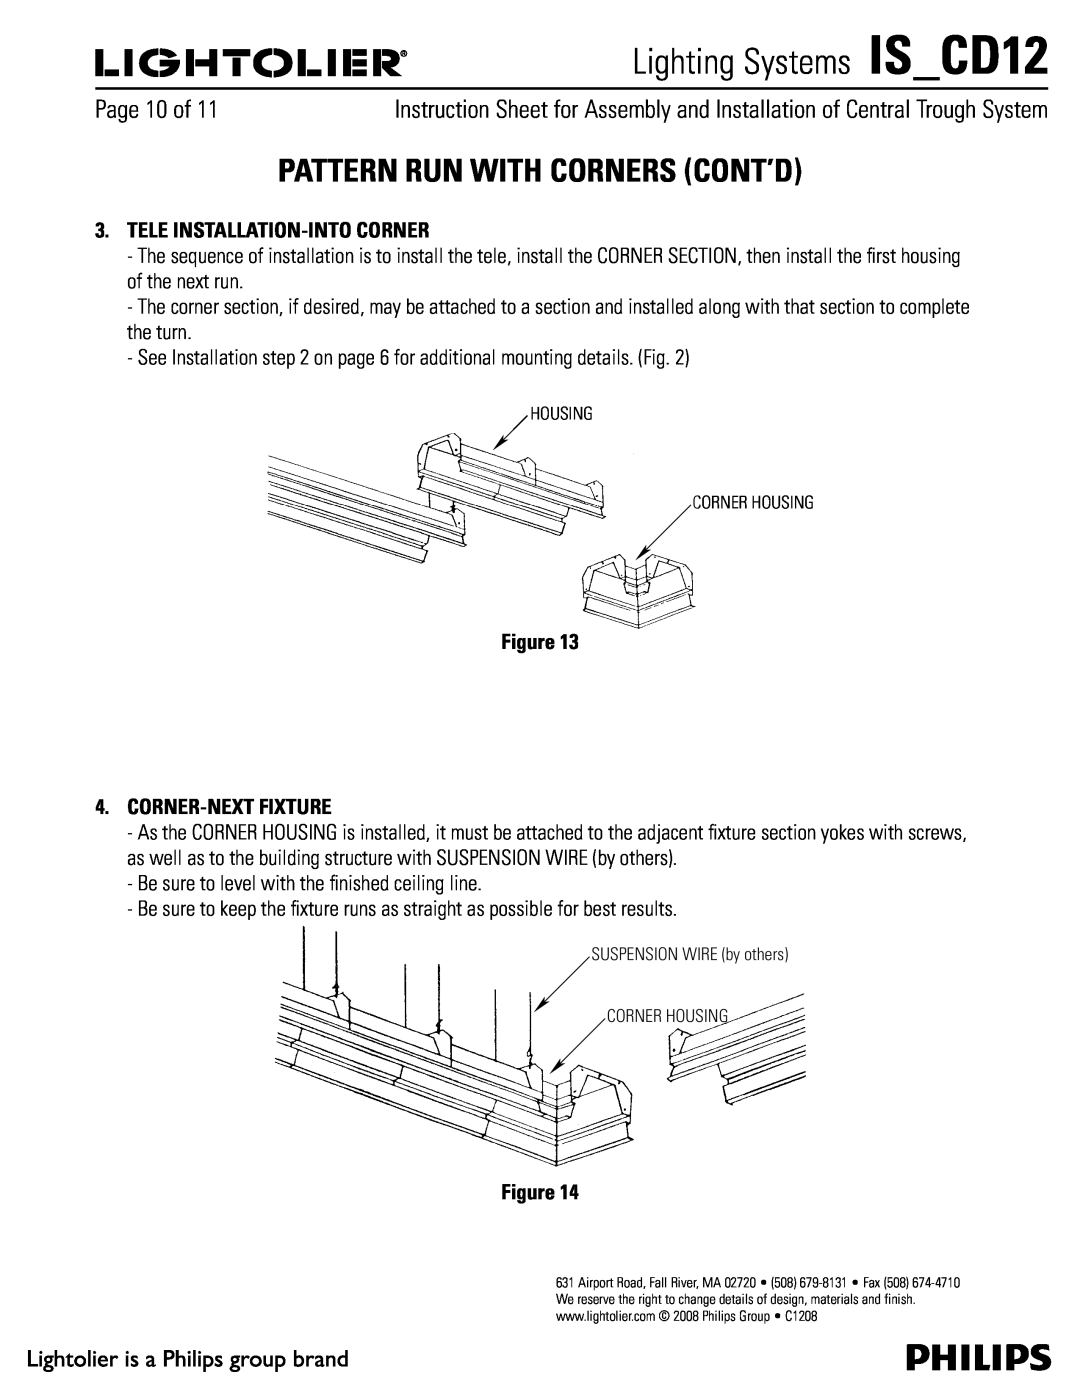 Lightolier IS_CD12 manual Pattern Run With Corners Cont’D, Tele Installation-Intocorner, Corner-Nextfixture 